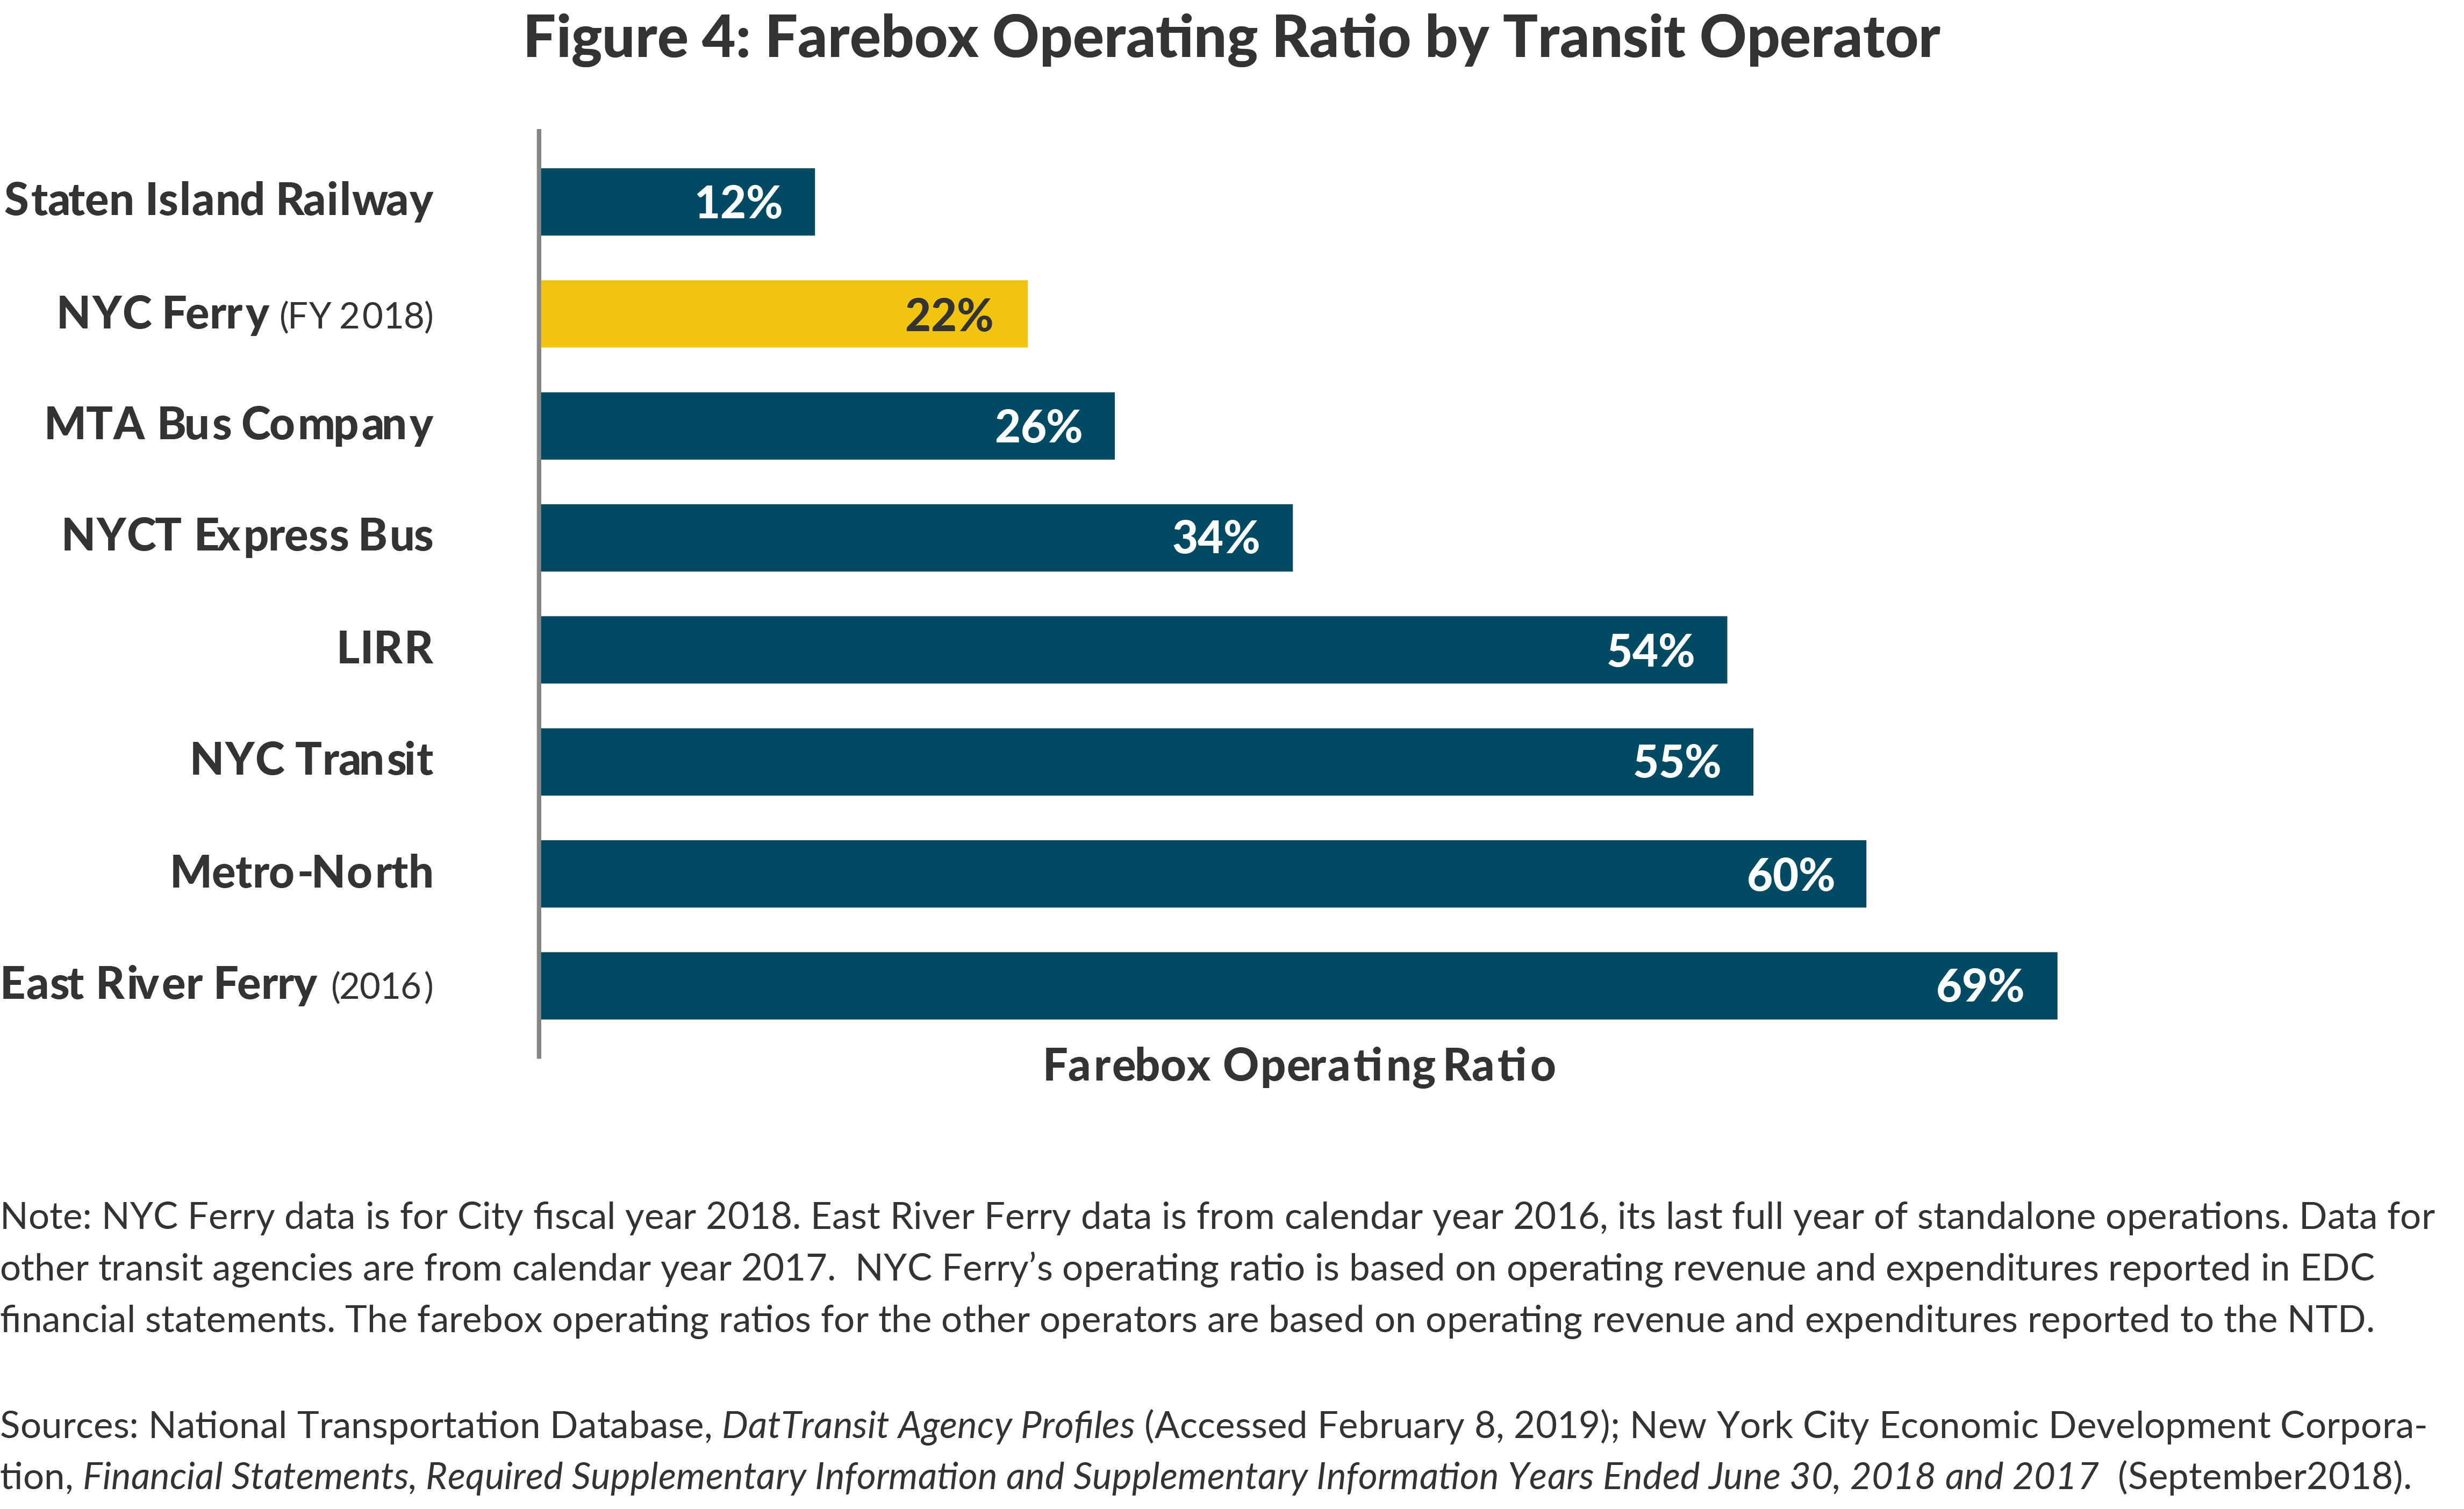 Figure 4. Farebox Operating Ratio by Transit Operator, 2017 